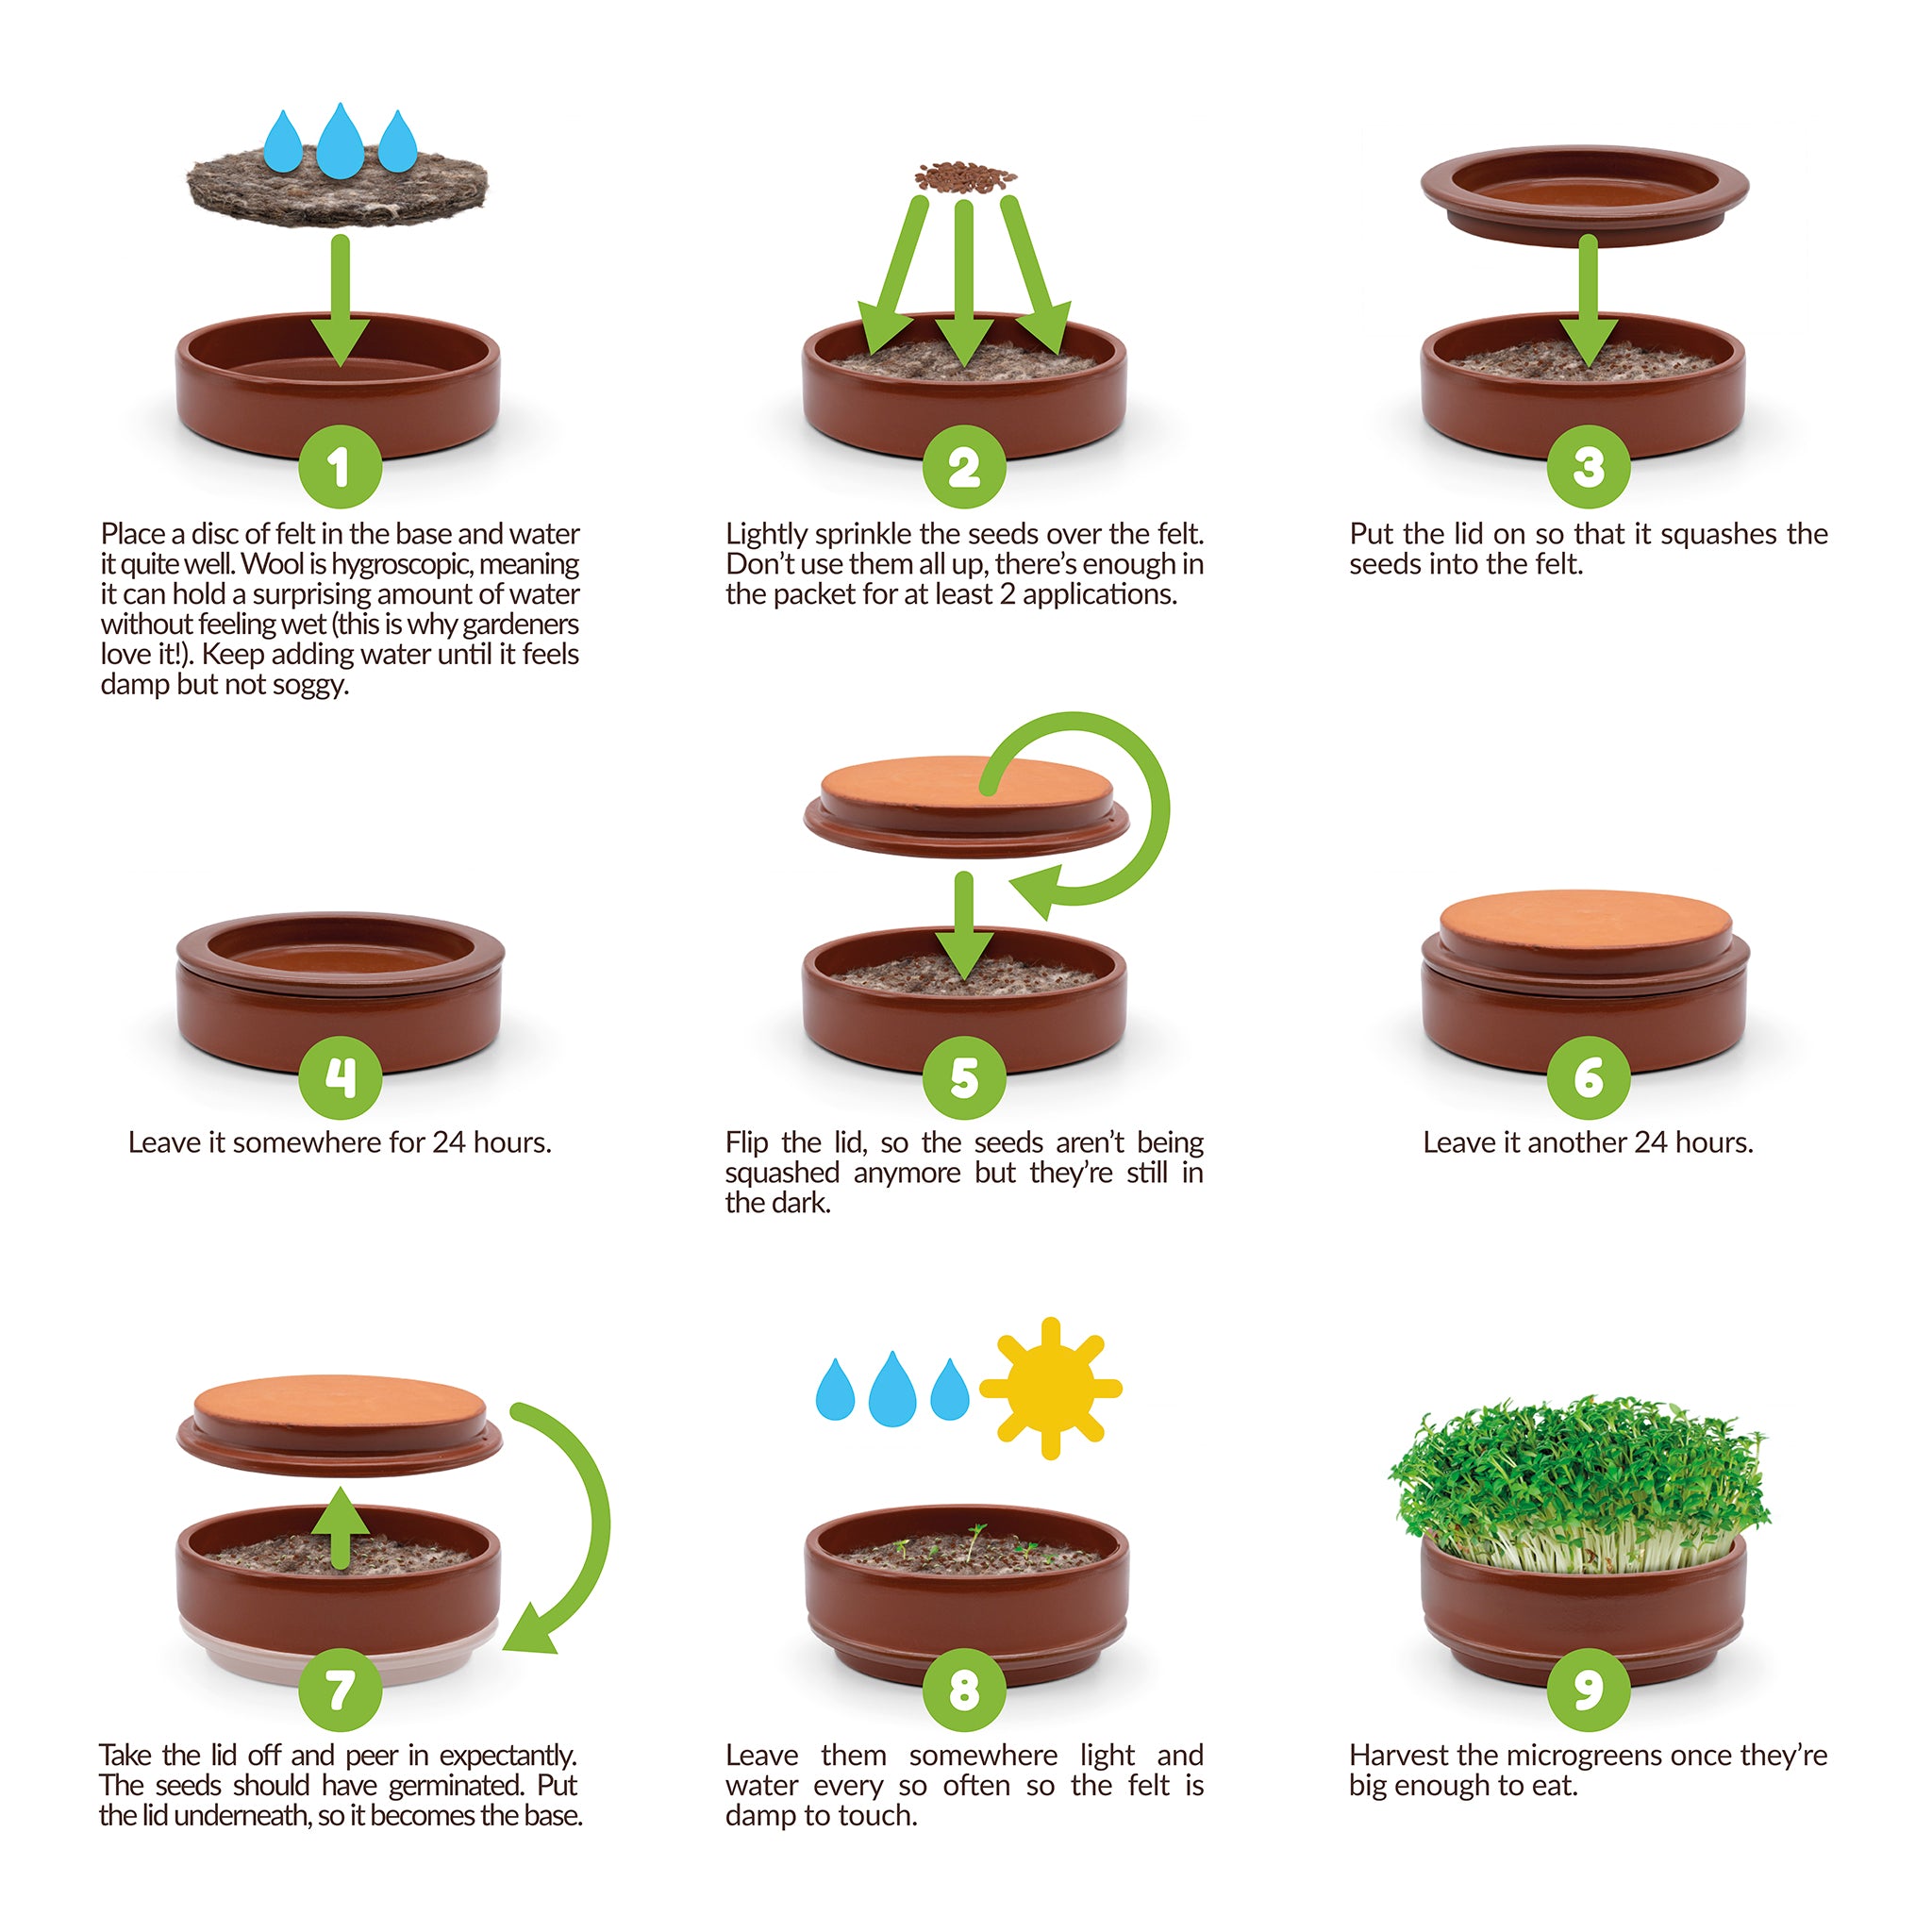 How to use microgreen grow kit instructions